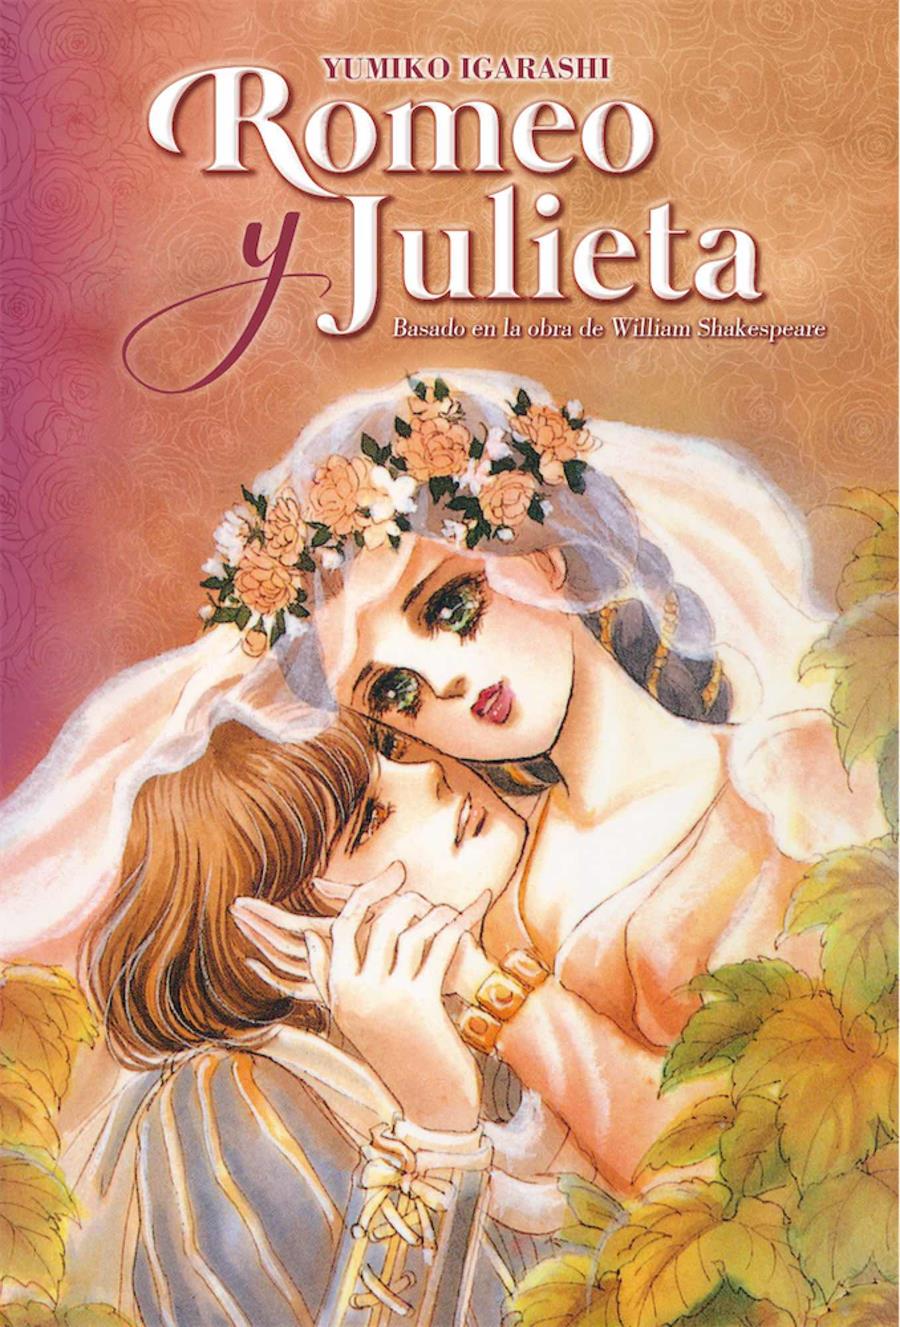 Romeo y Julieta | N0622-ARE09 | Yumiko Igarashi | Terra de Còmic - Tu tienda de cómics online especializada en cómics, manga y merchandising